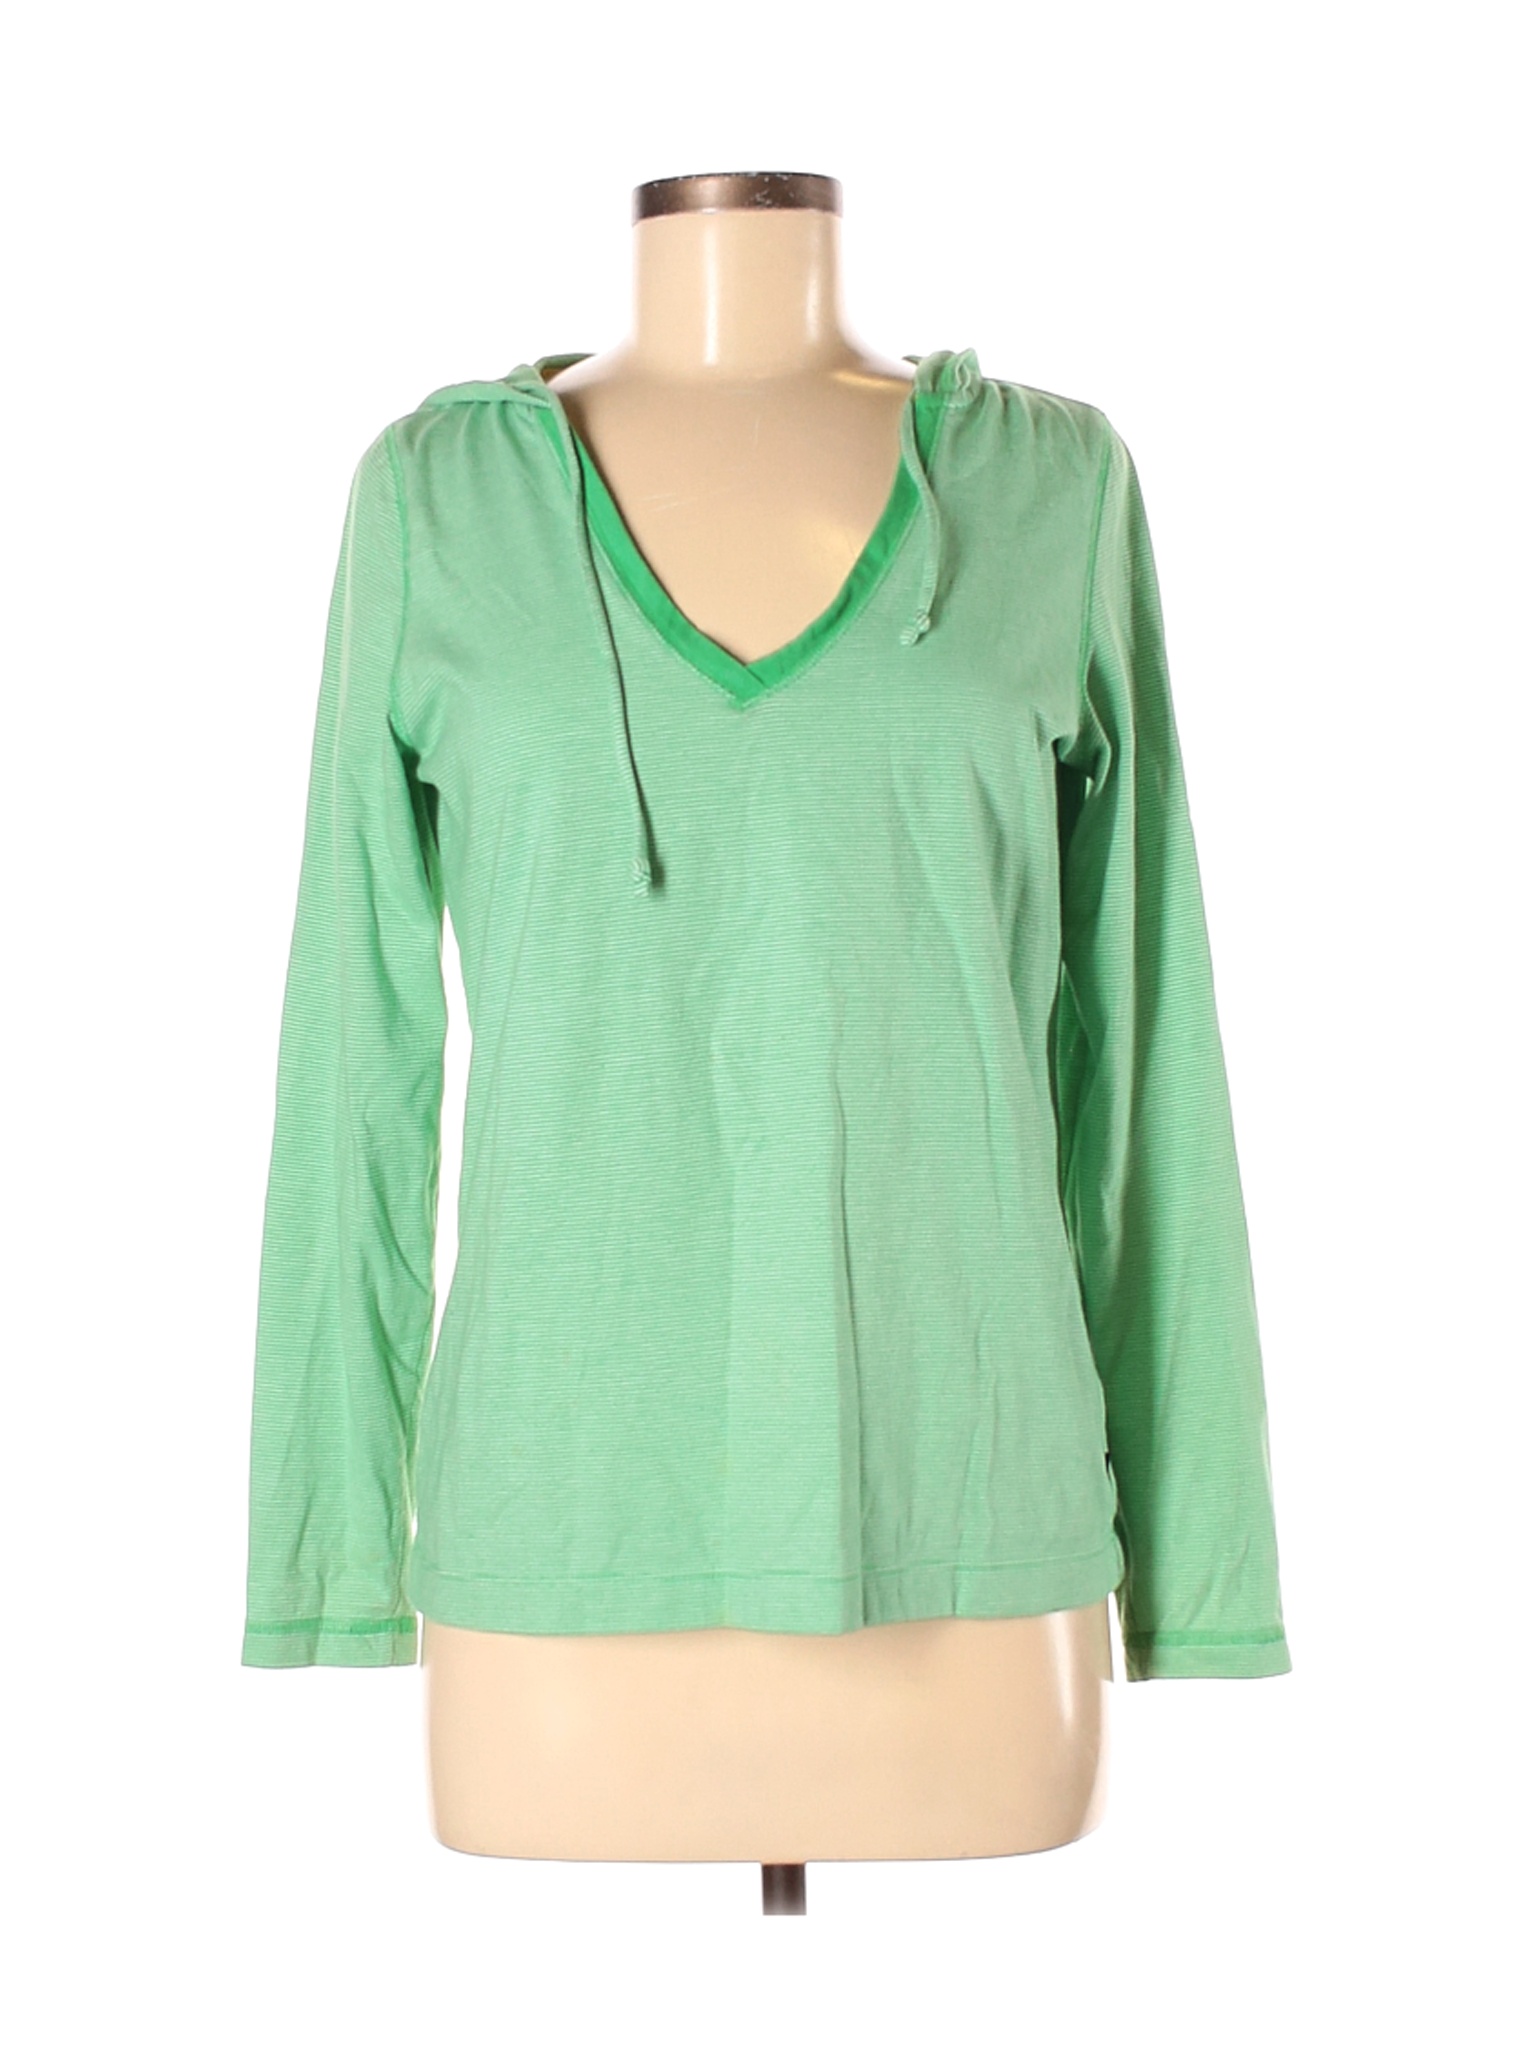 Lands' End Women Green Pullover Hoodie 6 | eBay